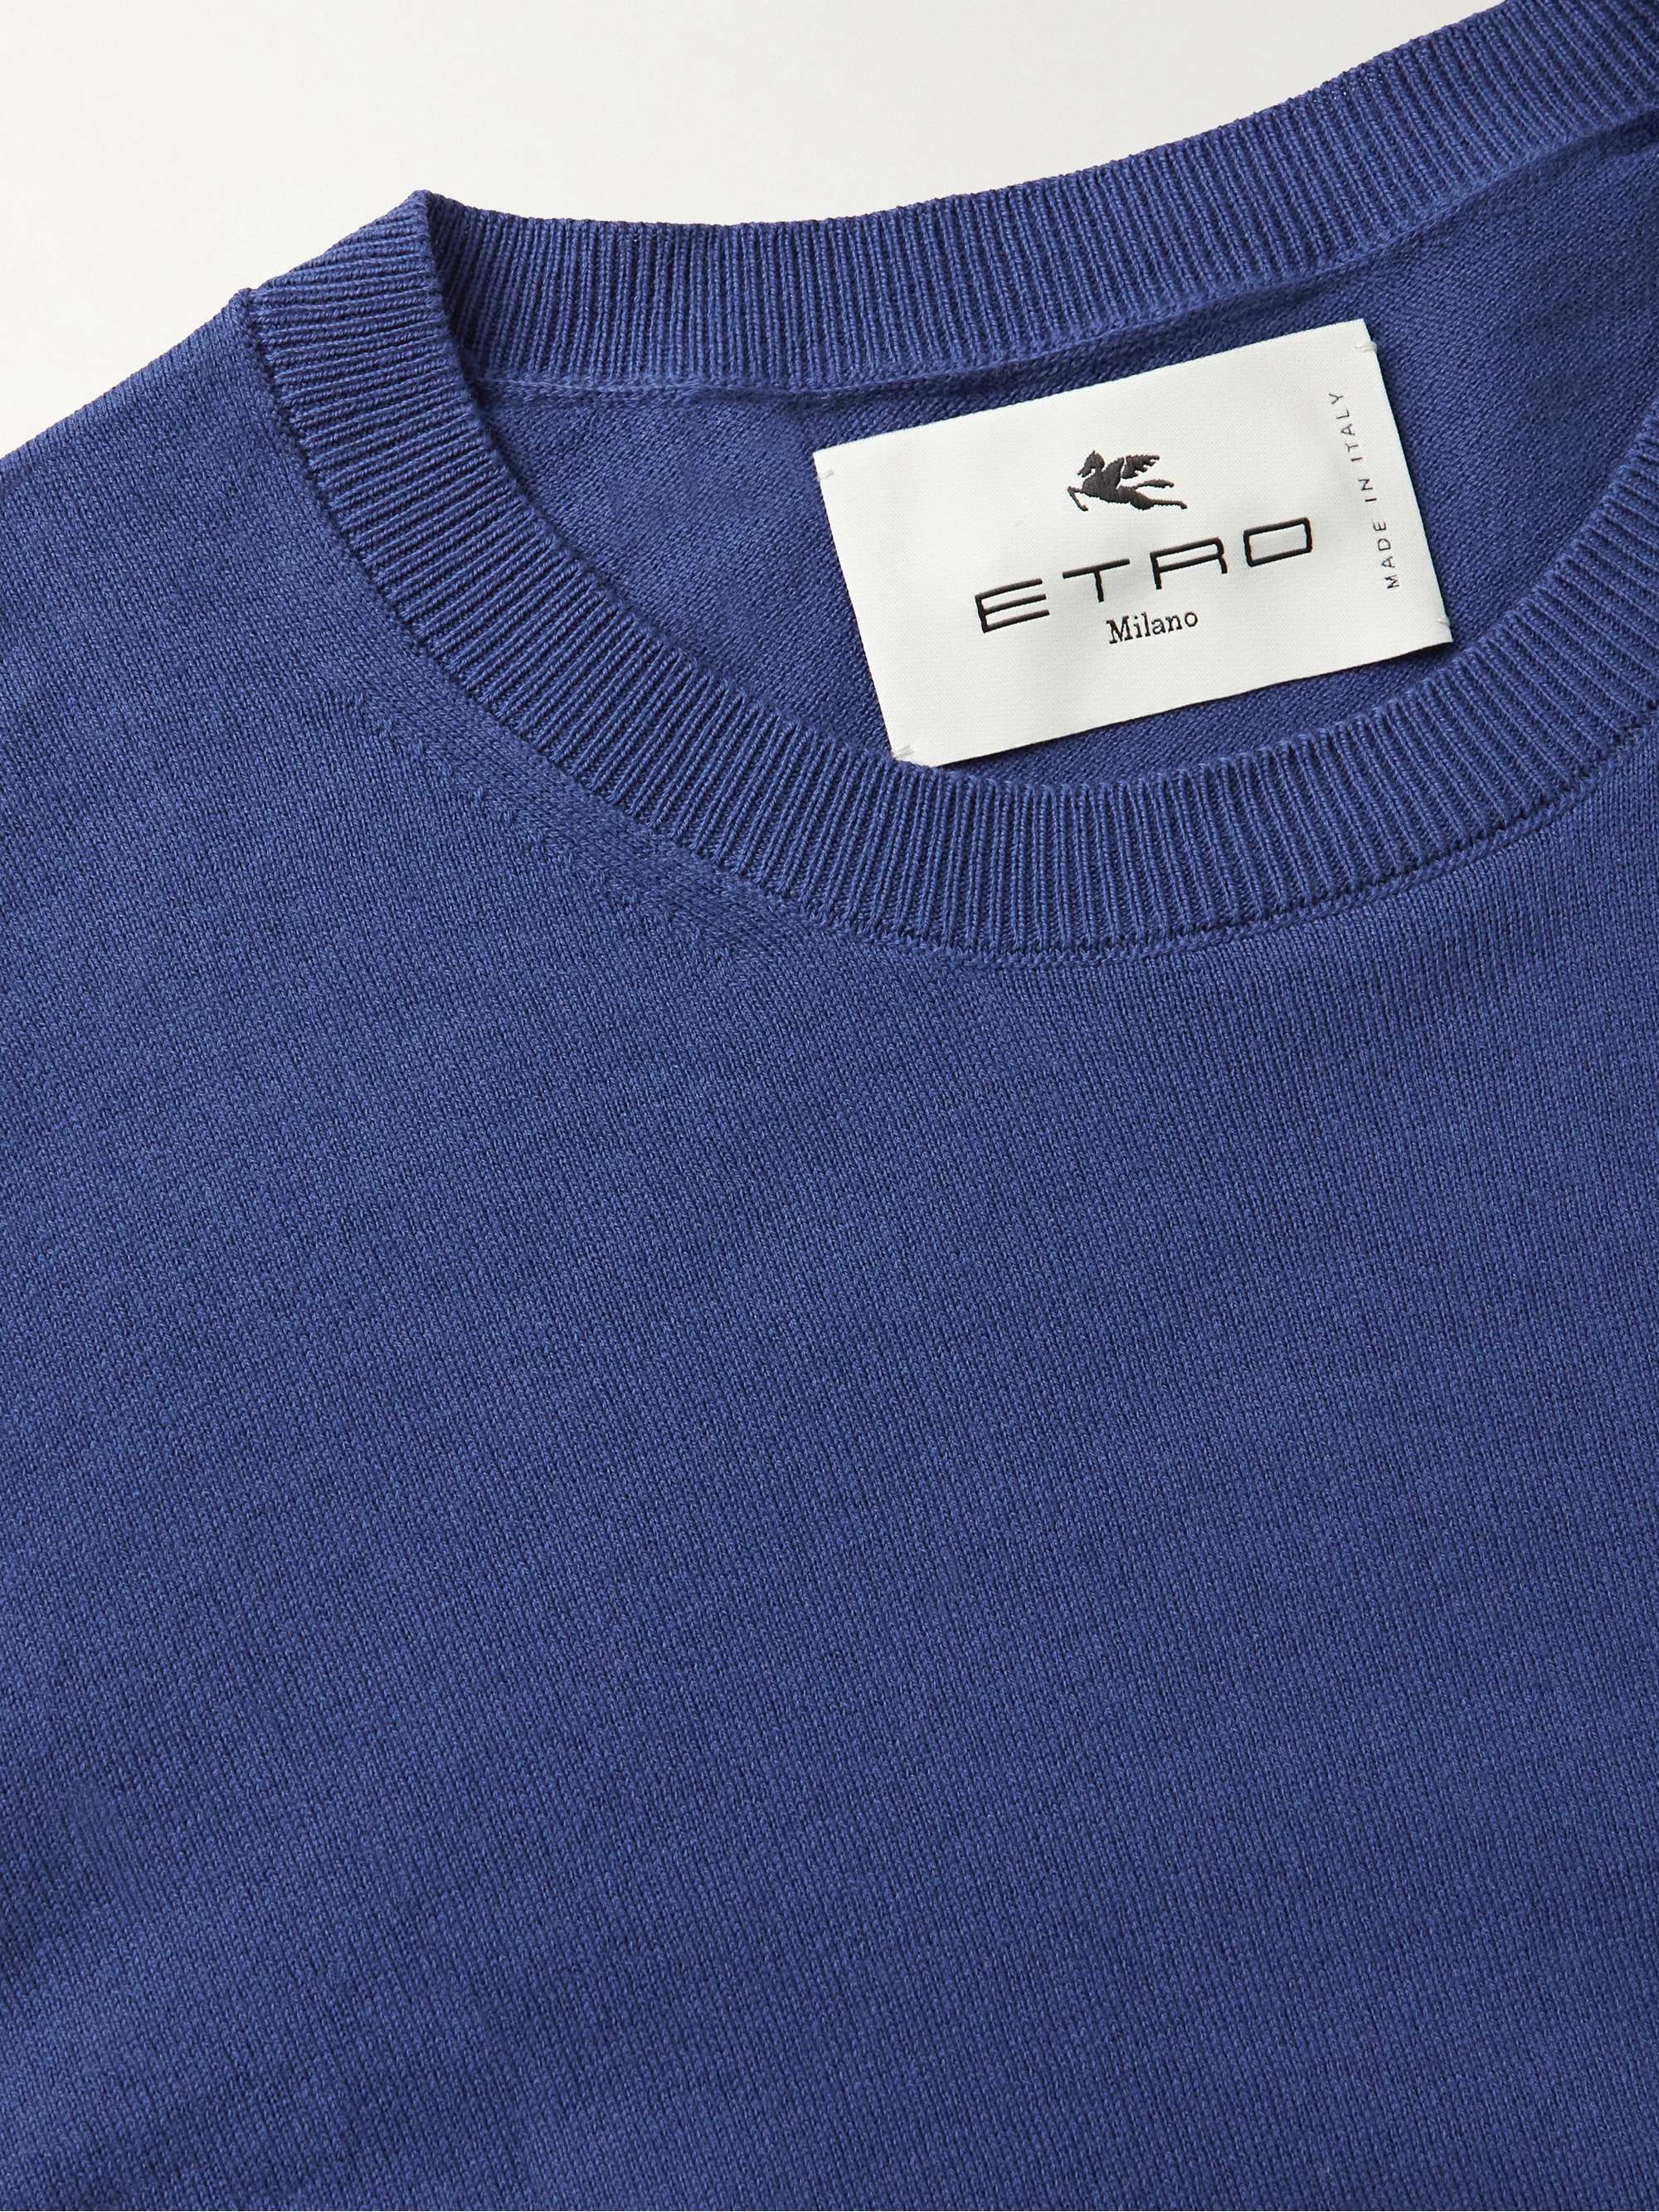 ETRO Cotton Sweater for Men | MR PORTER